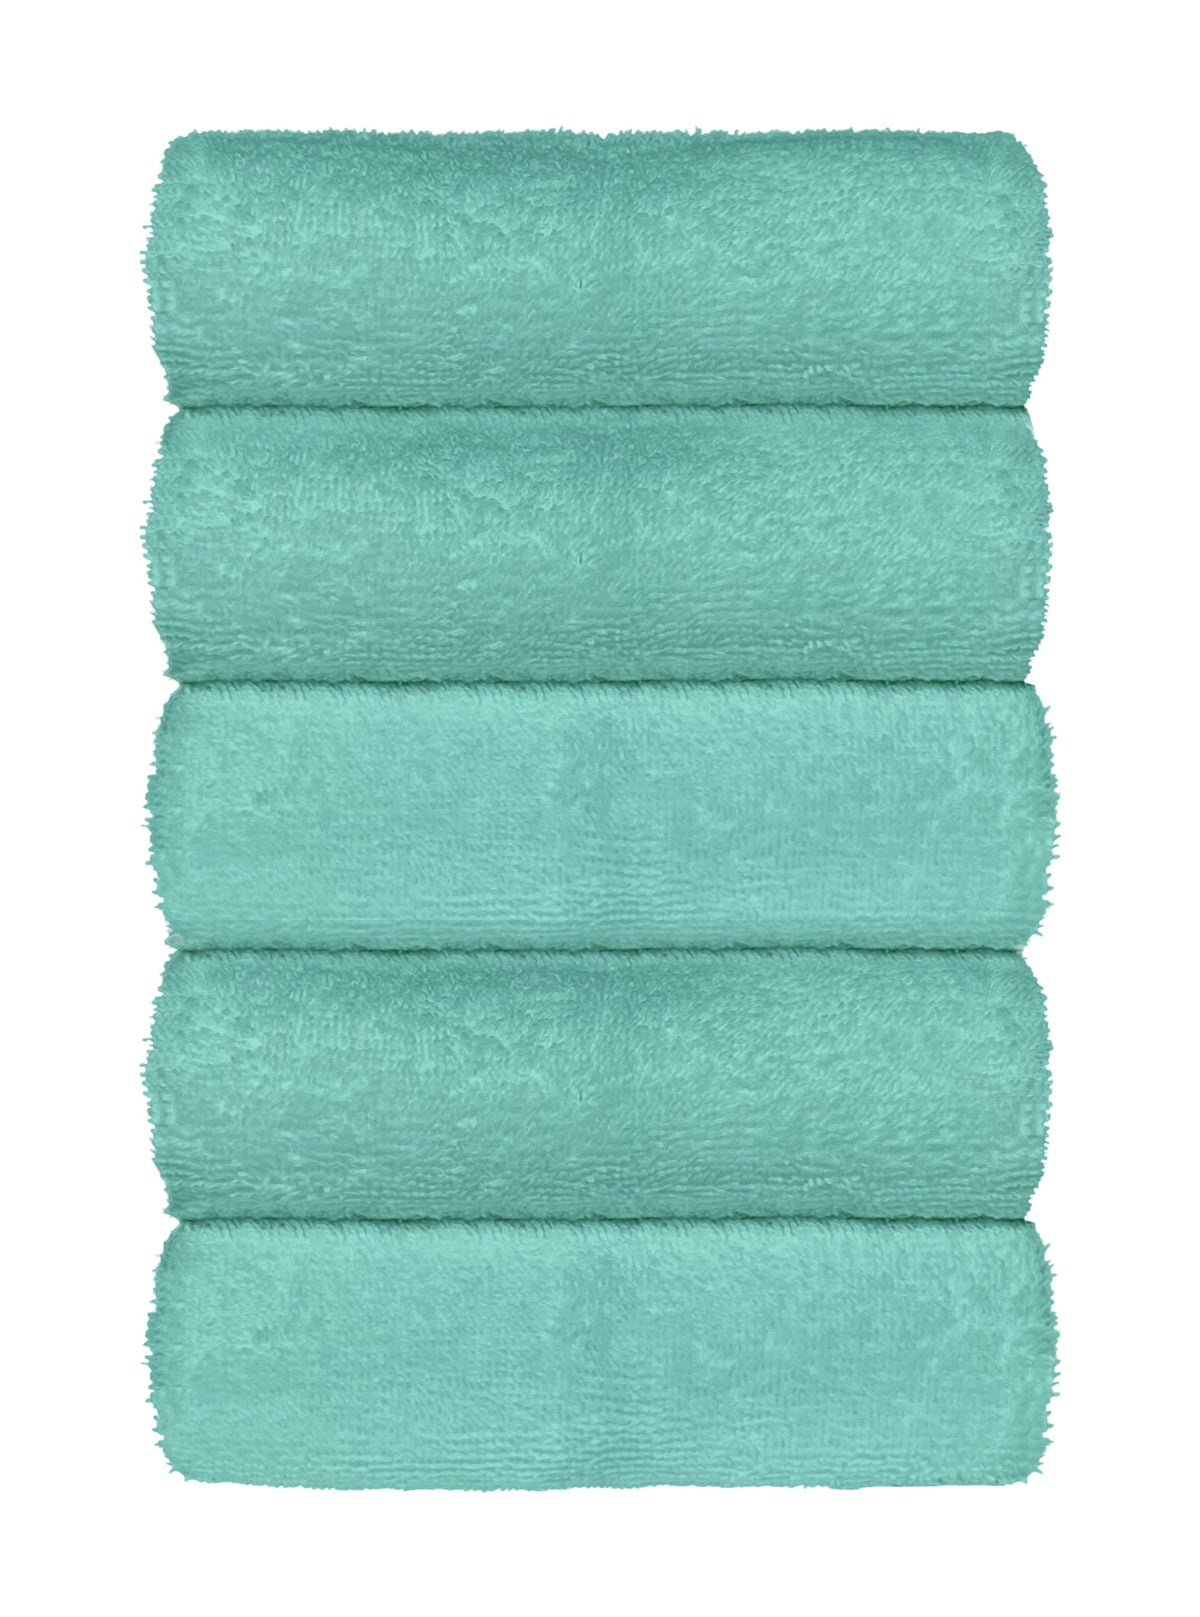 Set Asciugamani Bagno 100% Cotone Super Assorbenti Telo Doccia Spugna Professionali Salvietta Lavetta Viso Asciugamano Teli Asciugamano - Verde